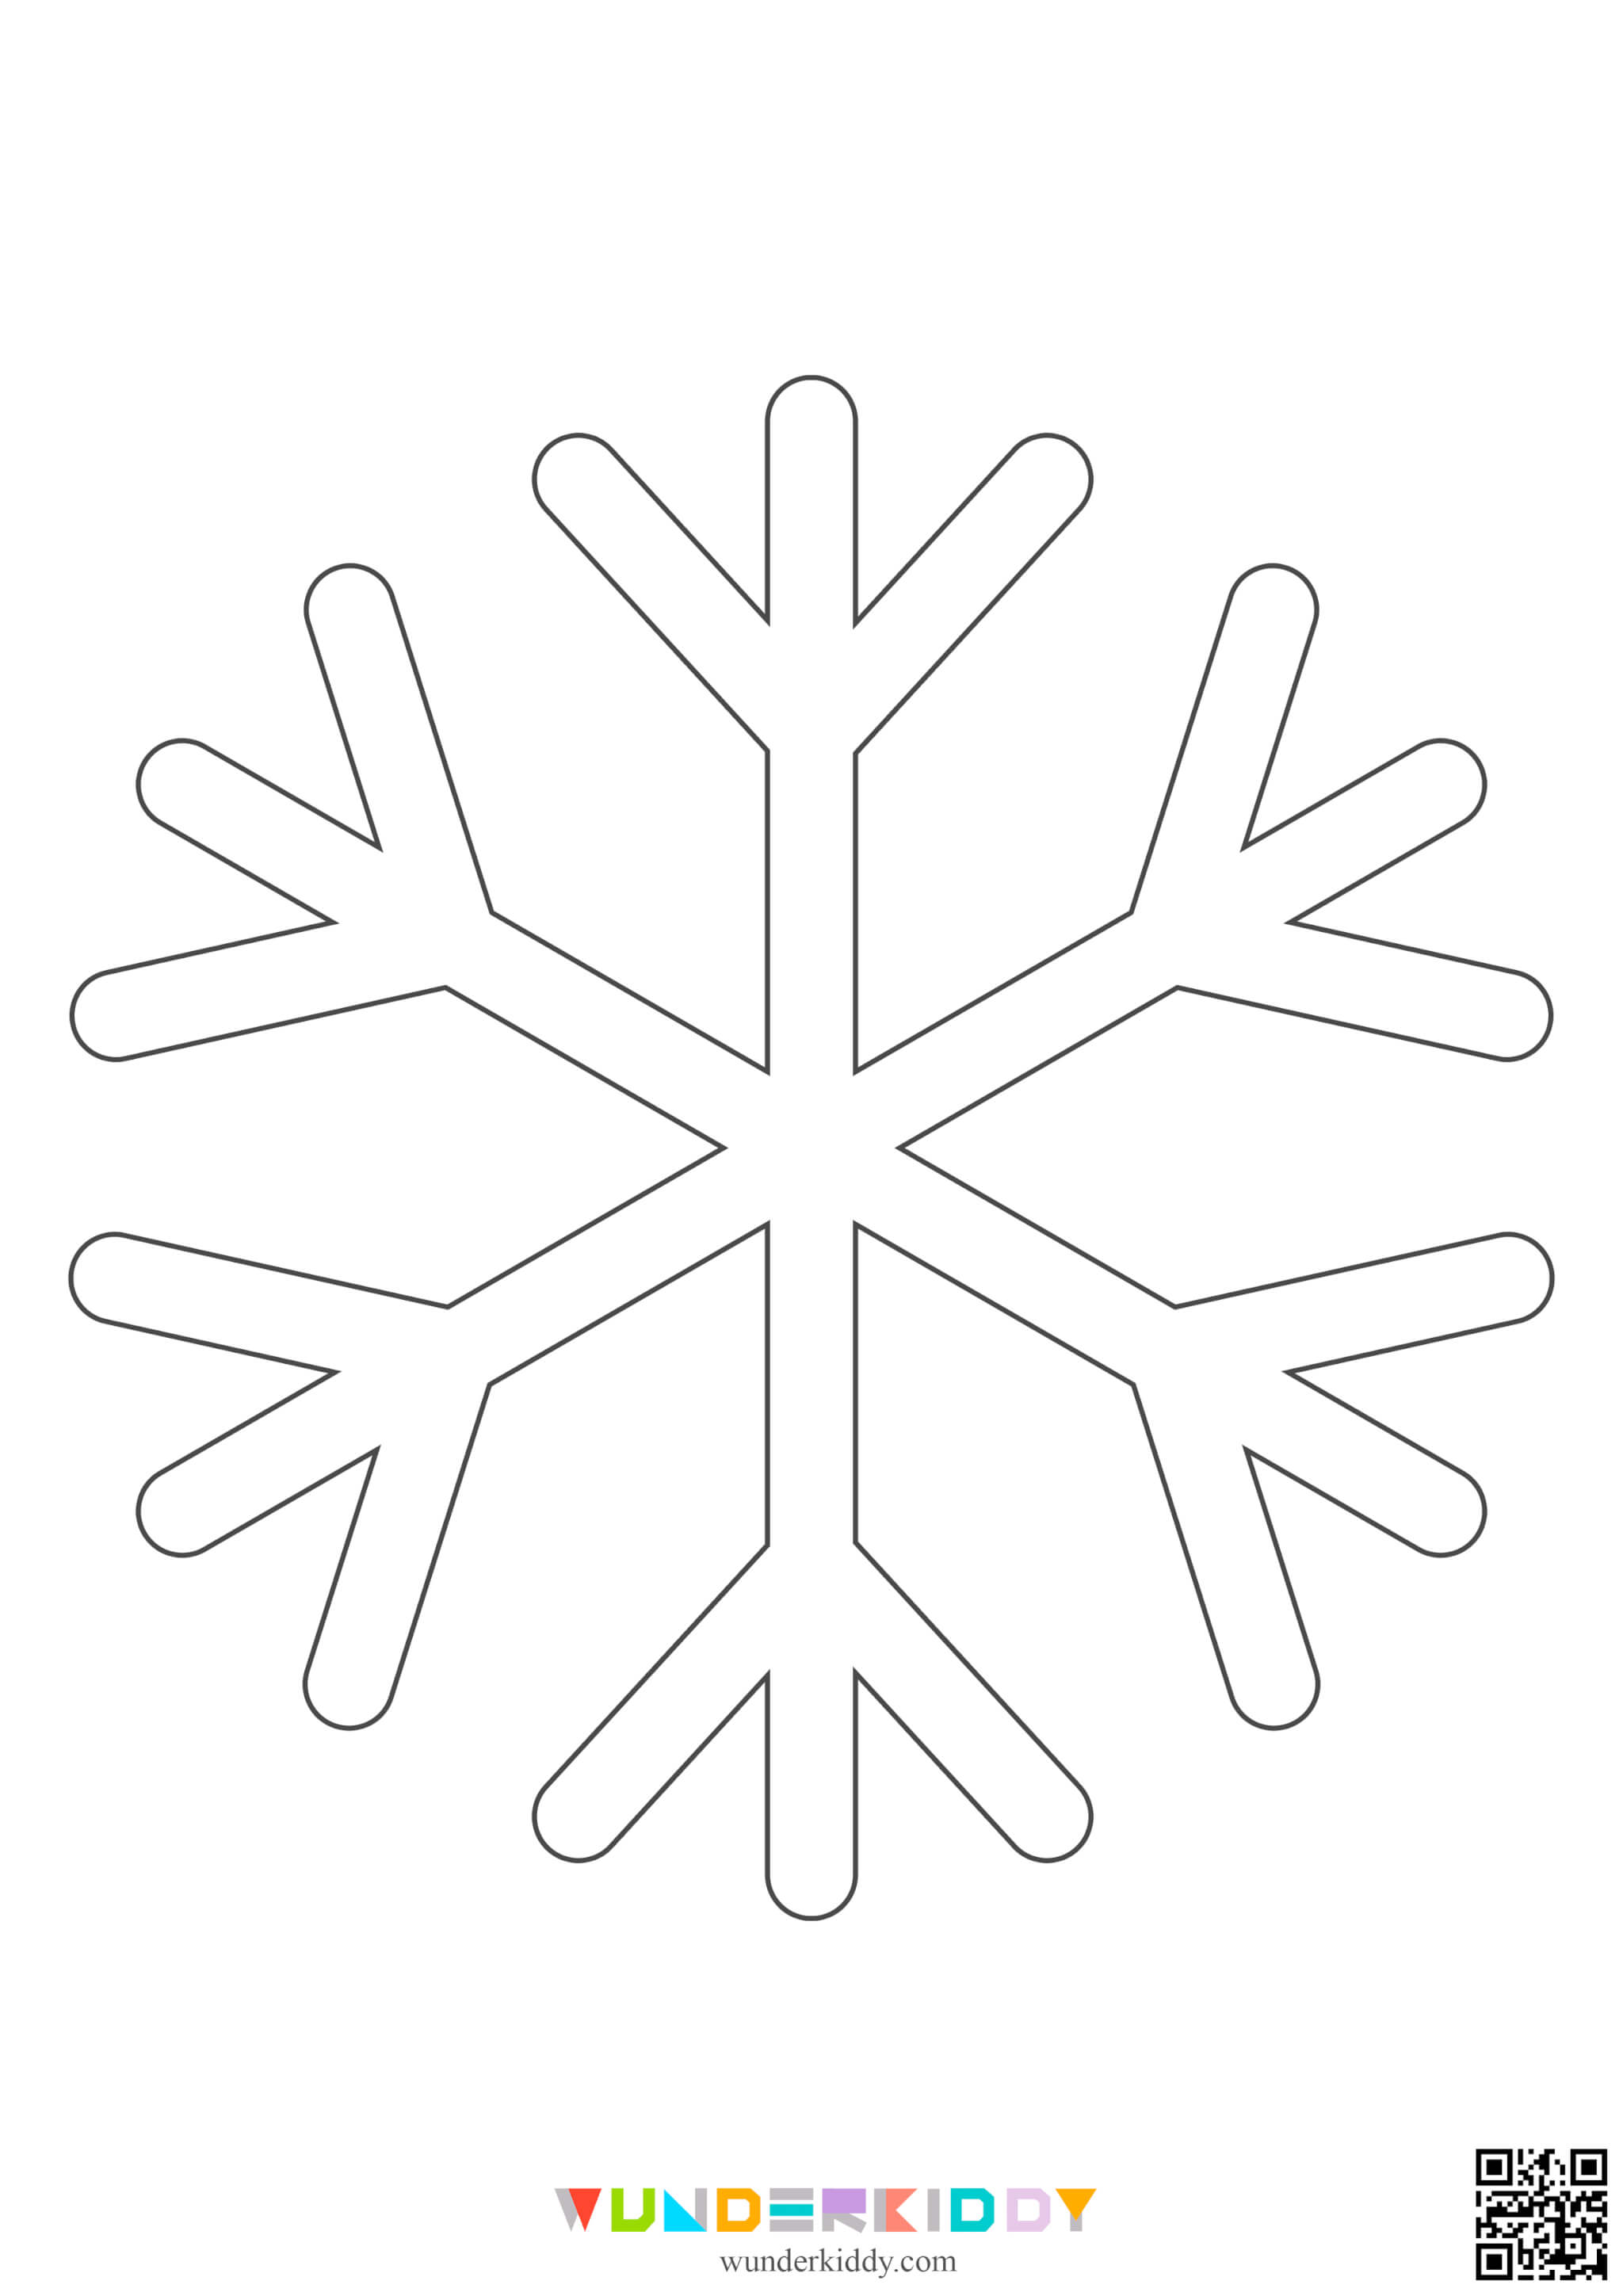 Snowflake Stencil Patterns - Image 10